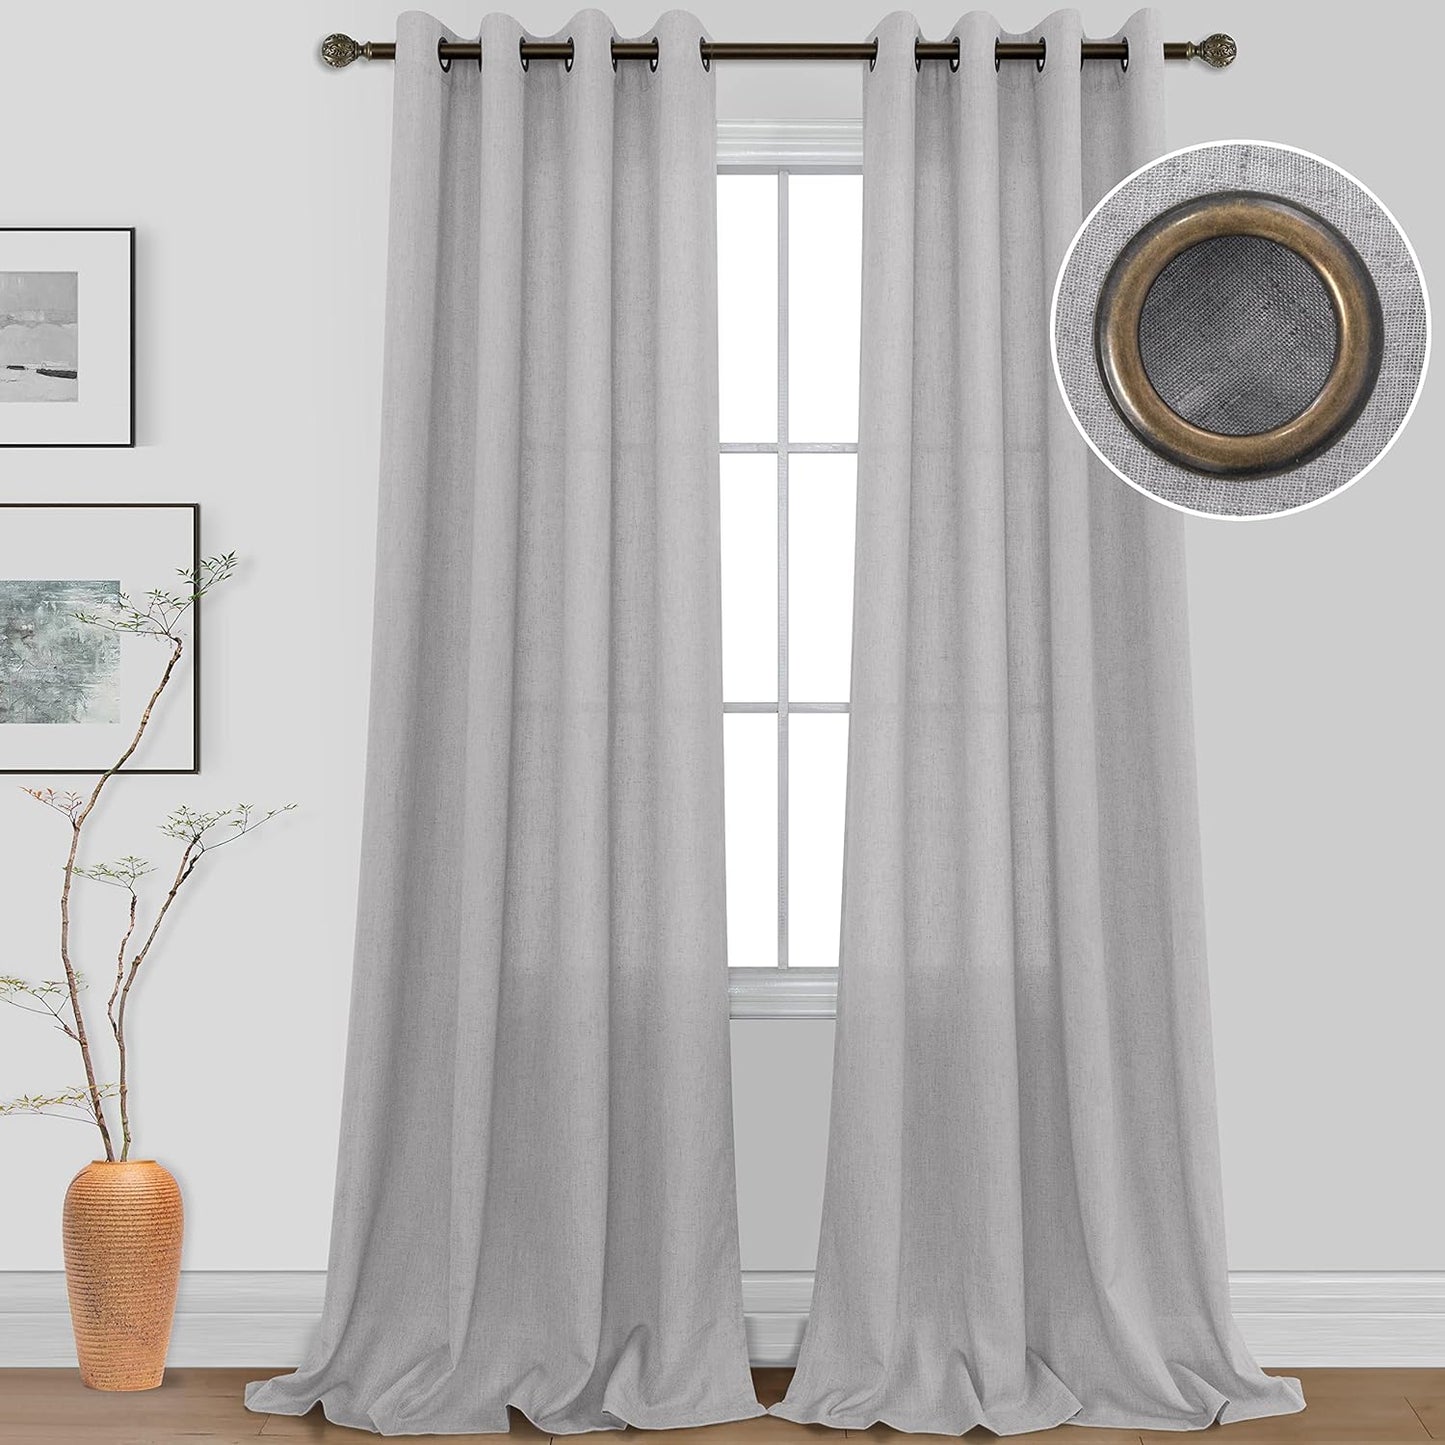 KOUFALL Linen Grommet Curtains for Living Room,Semi Sheer Boho Farmhouse Neutral Cream Curtain Drapes with Bronze Grommets,Room Curtains for Bedroom Window Set of 2 Panels 84 Length  KOUFALL TEXTILE Grey 52X96 